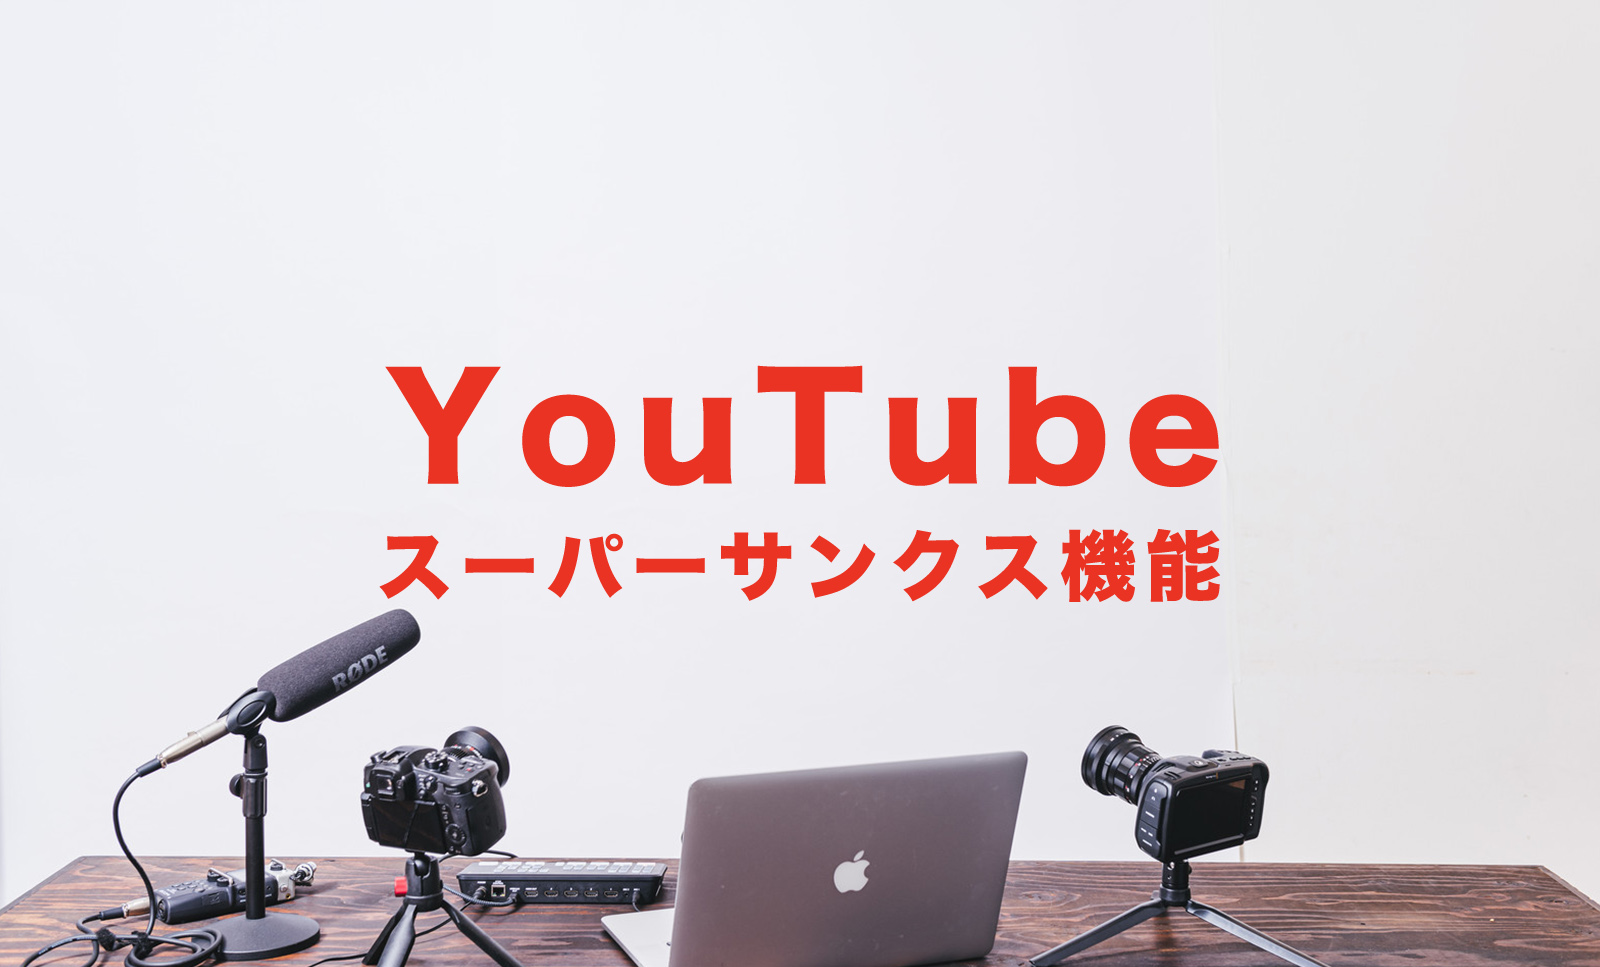 YouTube(ユーチューブ)のSuper Thanks(スーパーサンクス)機能とは？日本対応？できない原因は？のサムネイル画像